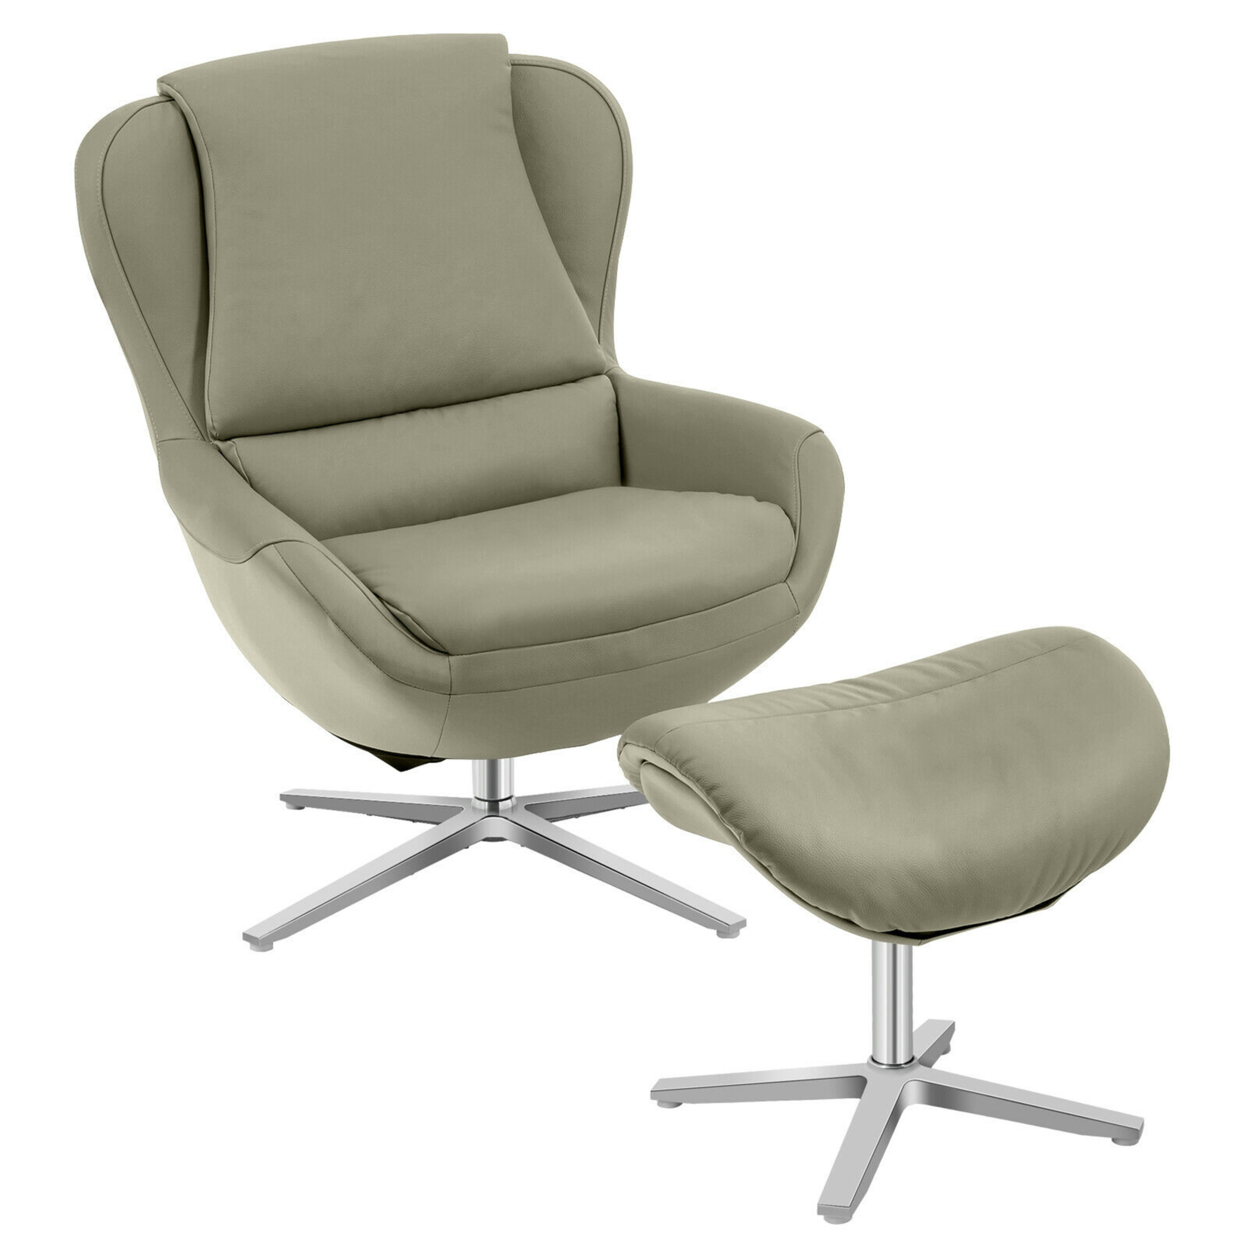 Swivel Rocking Chair Top Grain Leather Lounge Armchair W/Ottoman - Grey